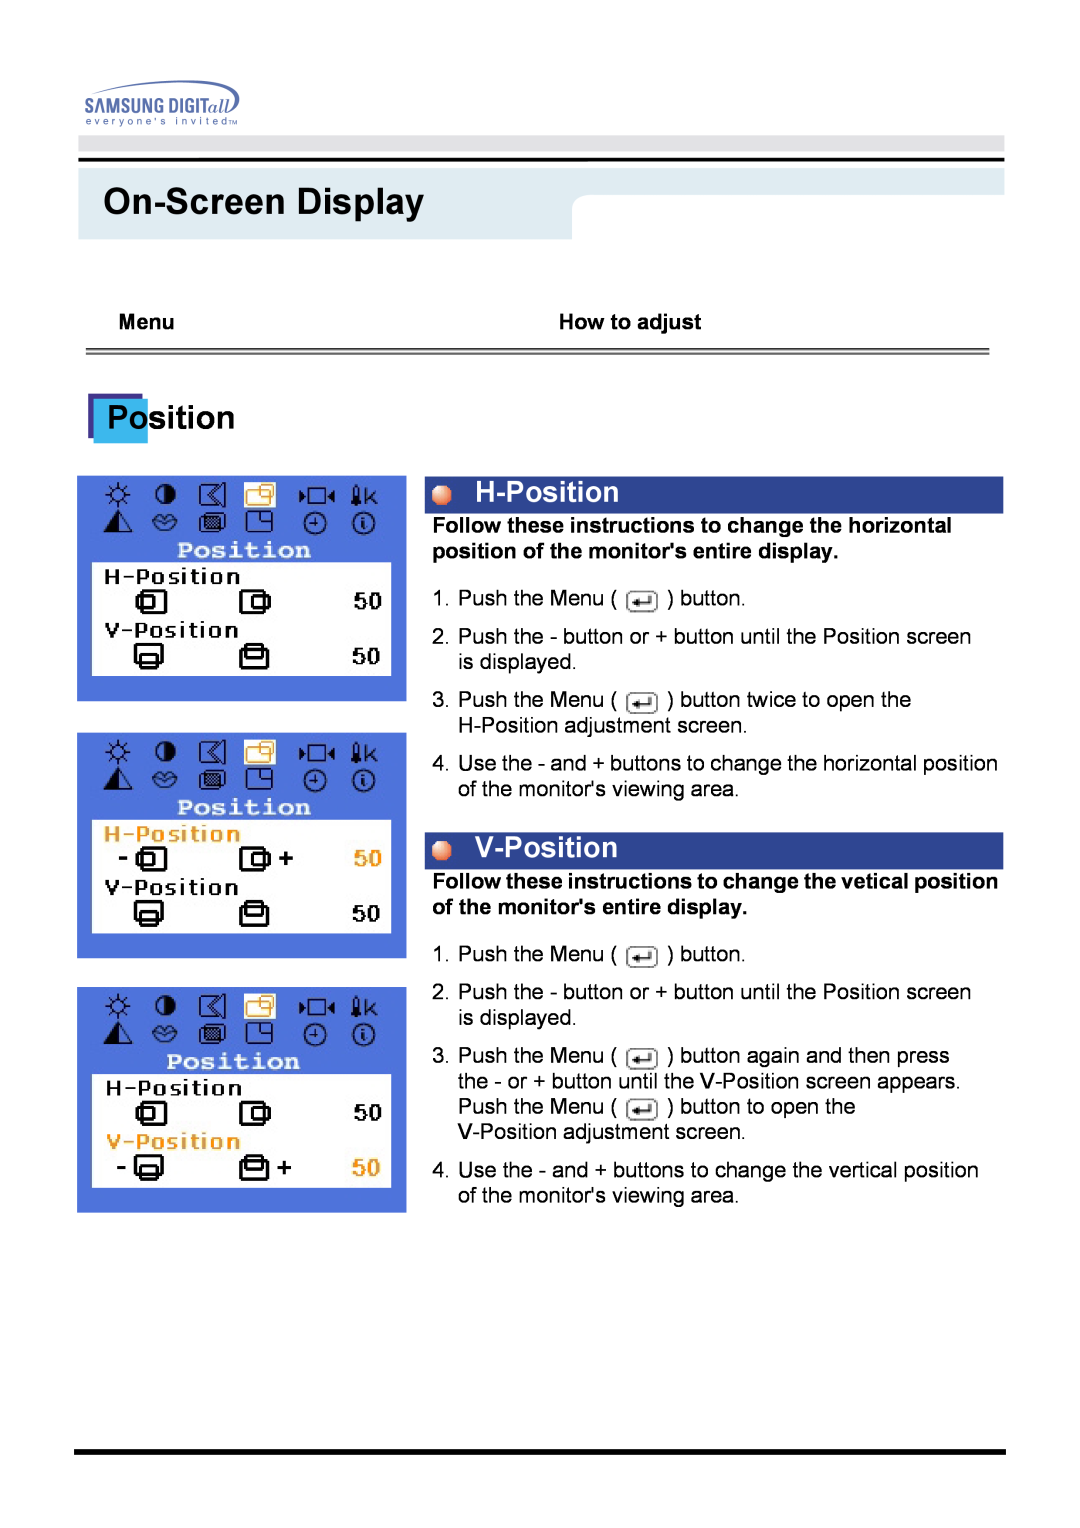 Samsung 760TFT manual H-Position, V-Position, On-Screen Display, Menu, How to adjust 